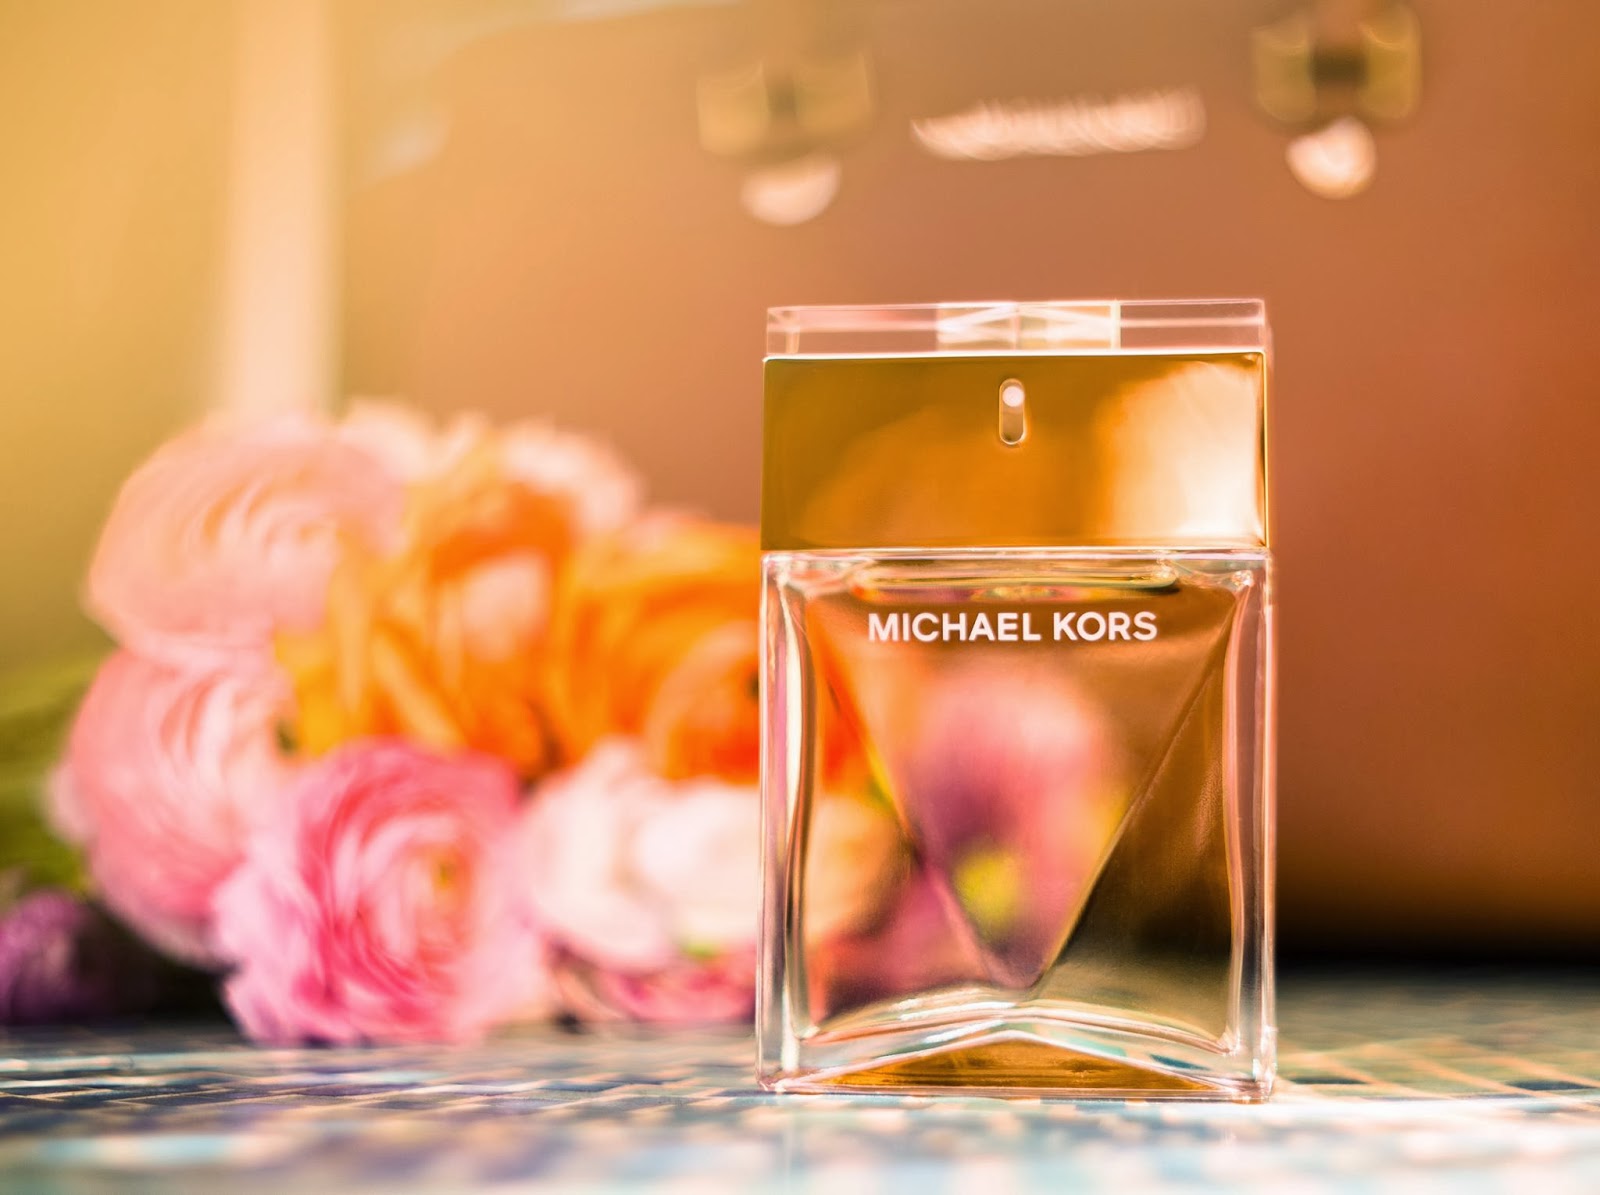 Michael Kors Spring Details 2014 - Provocative Woman